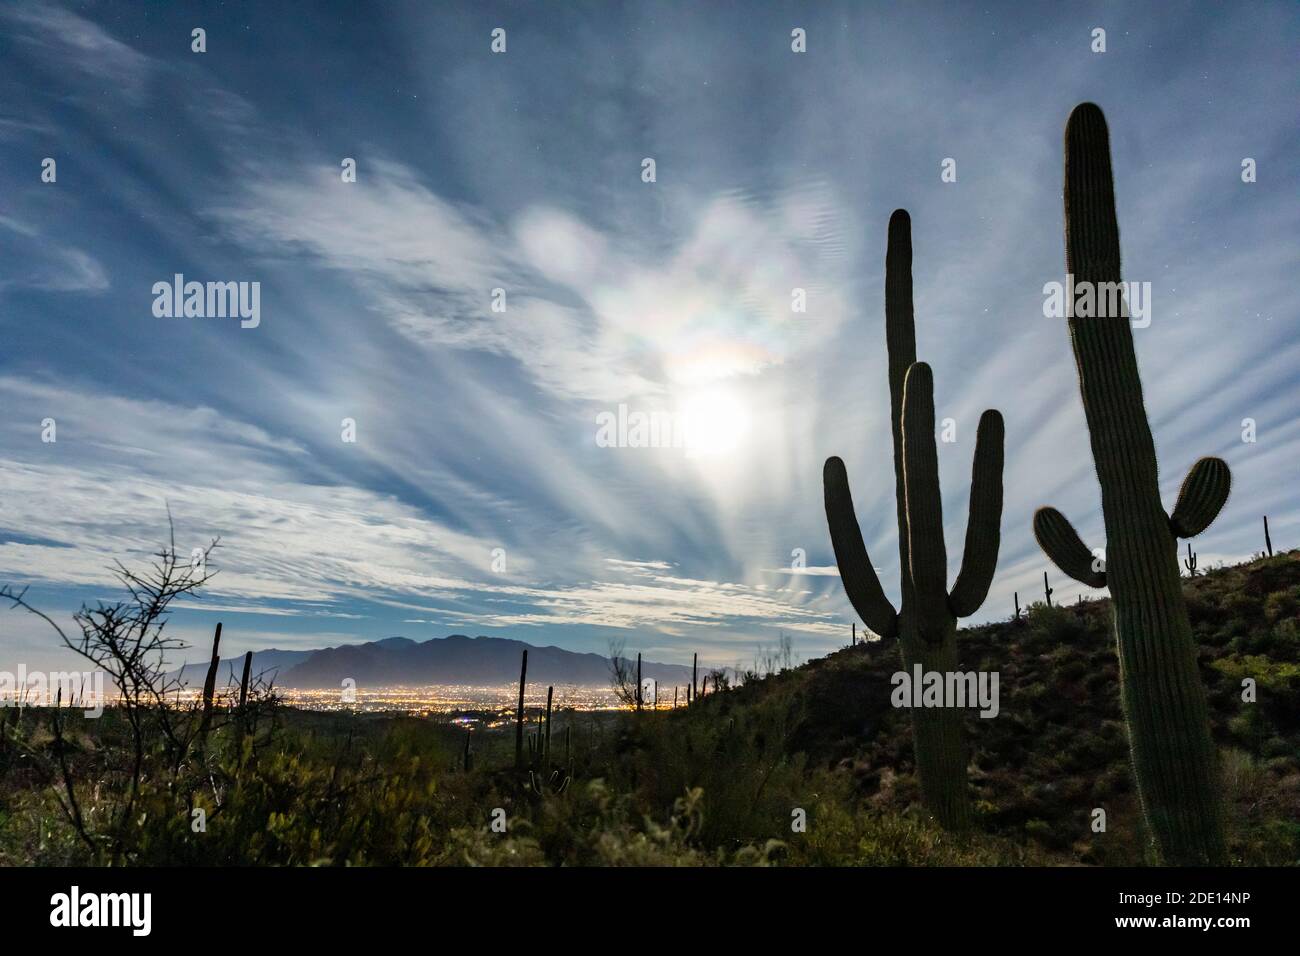 The super full moon rising over saguaro cactus (Carnegiea gigantea), Sweetwater Preserve, Tucson, Arizona, United States of America, North America Stock Photo